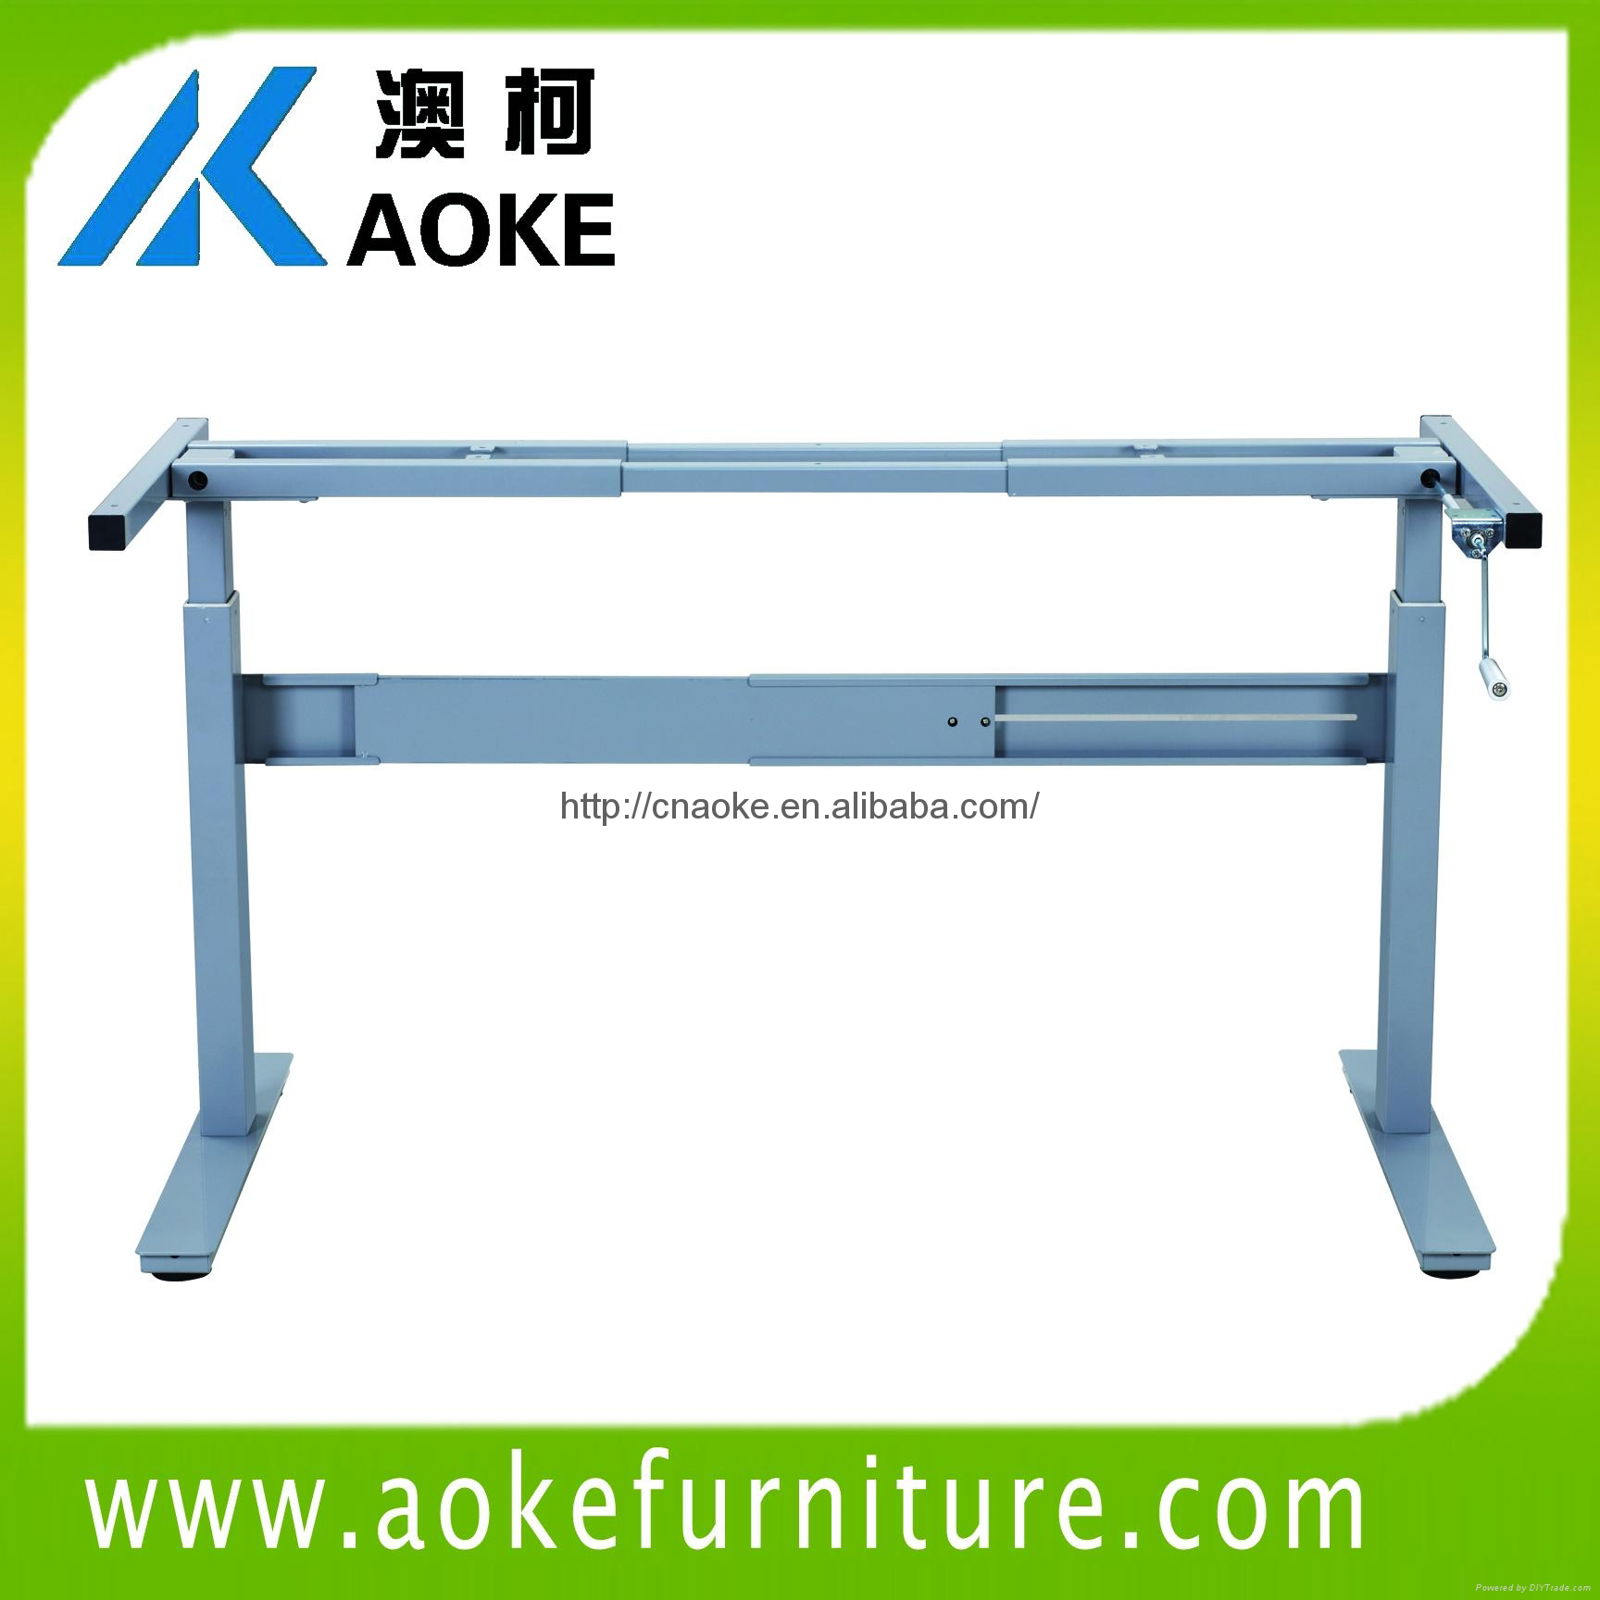 AOKE AK02HT-B manual cranked adjustable tables 5